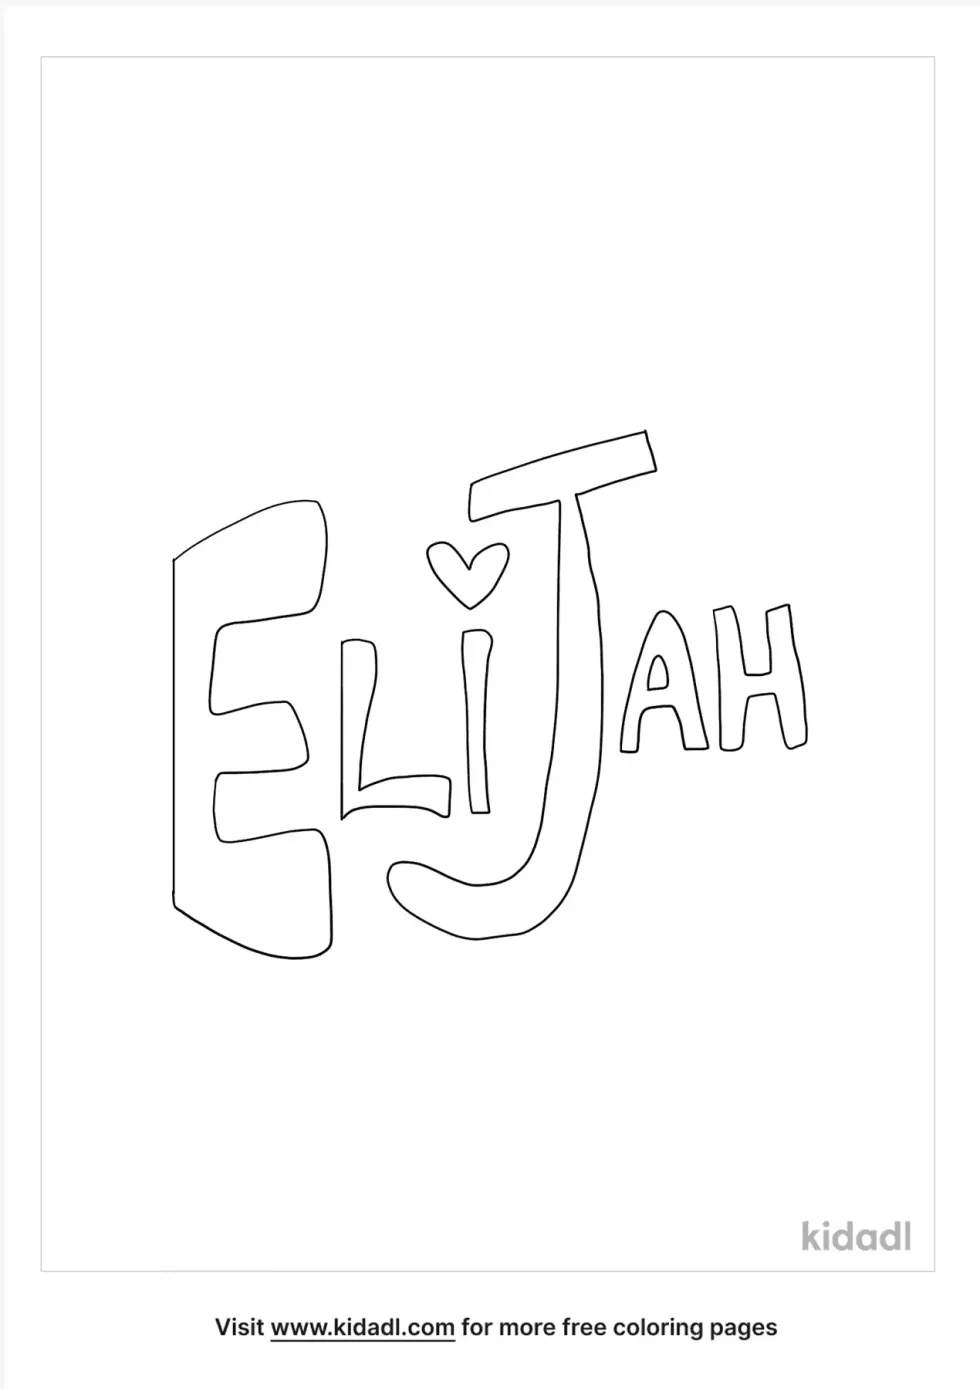 Elijah Name